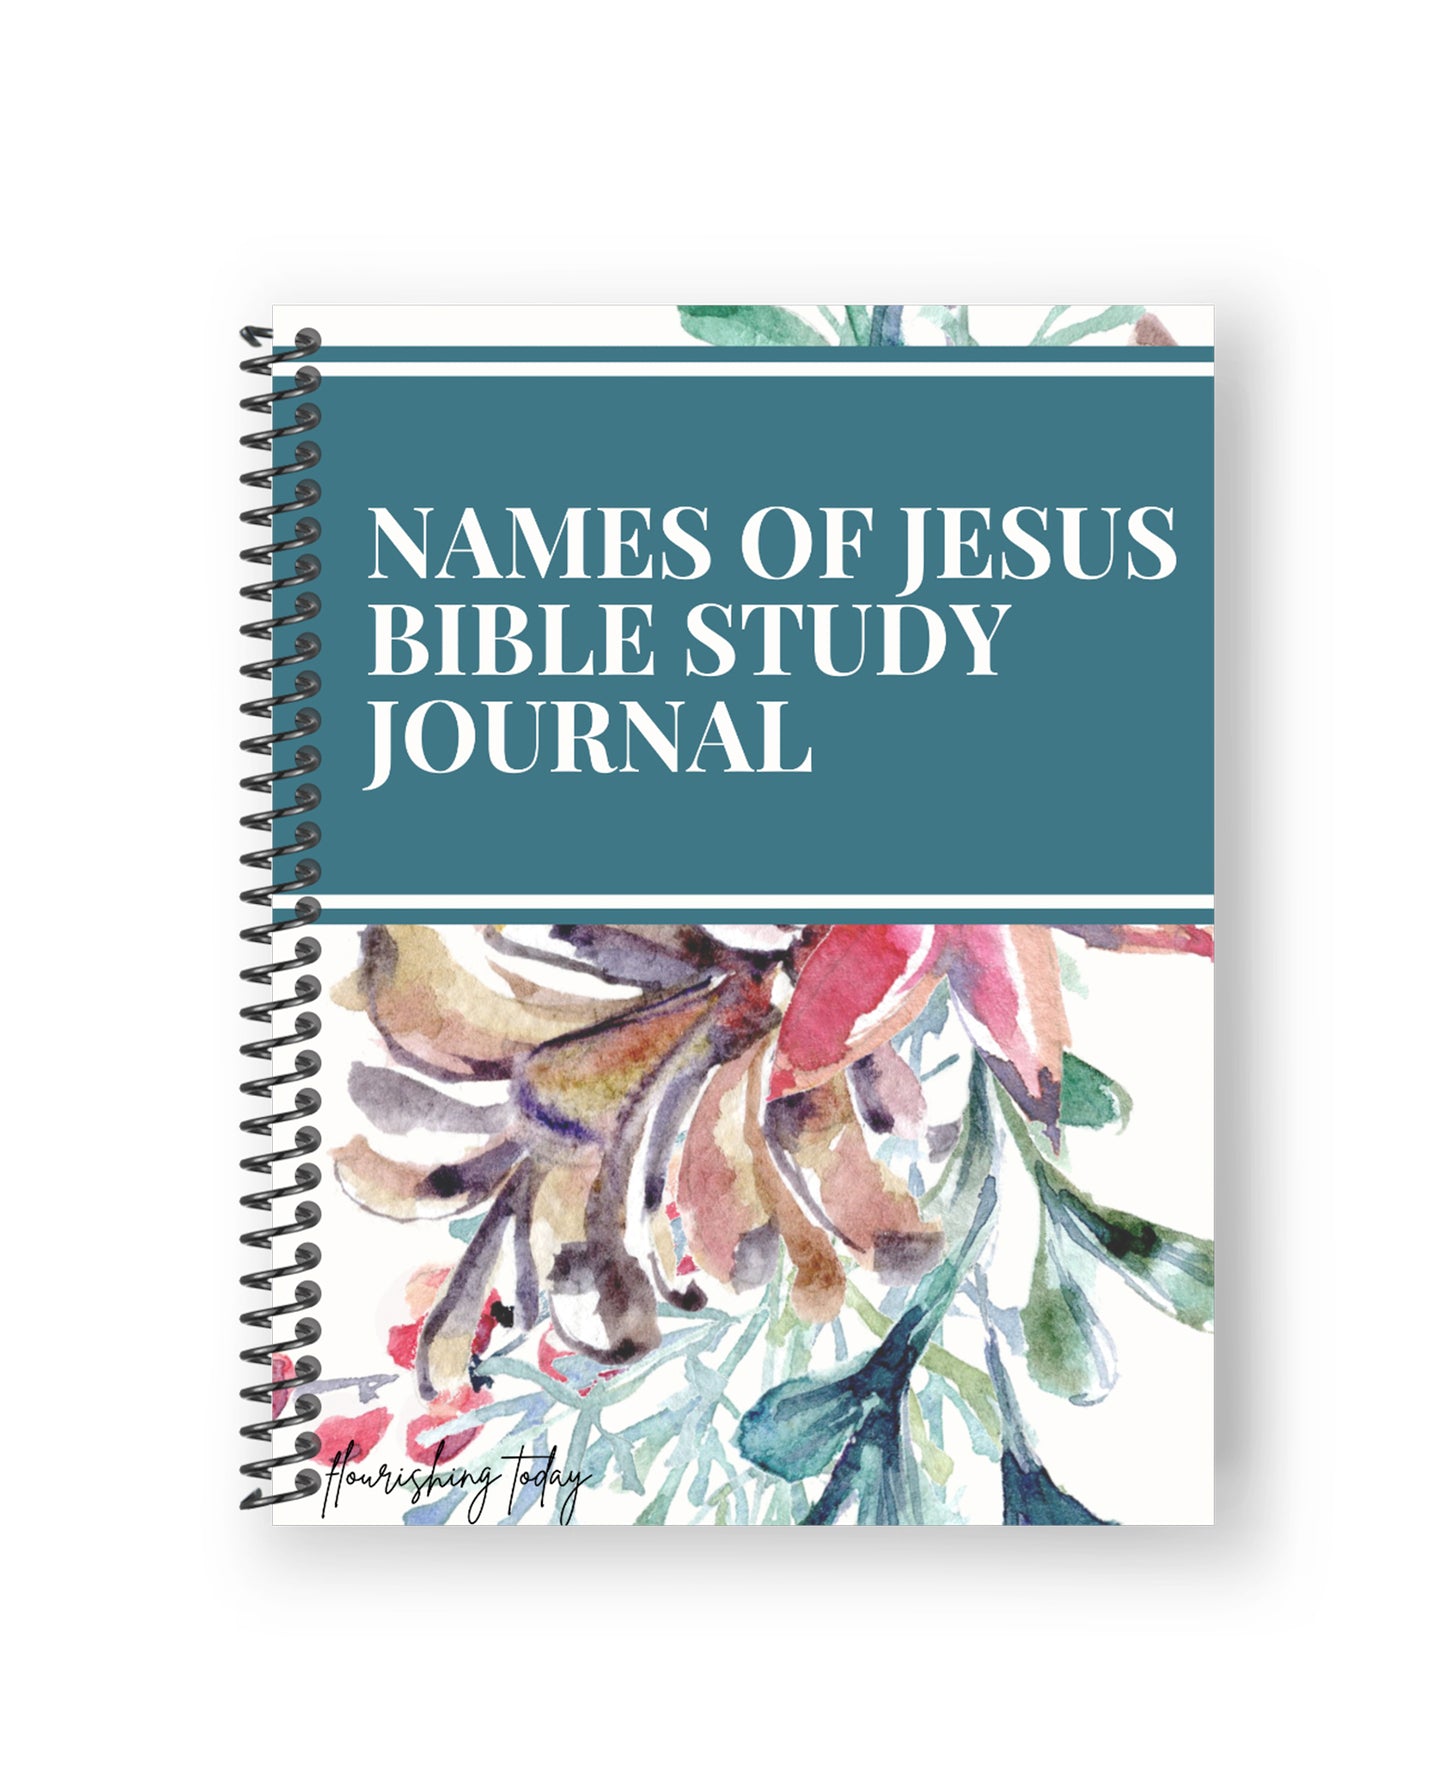 Names of Jesus Bible Study Journal